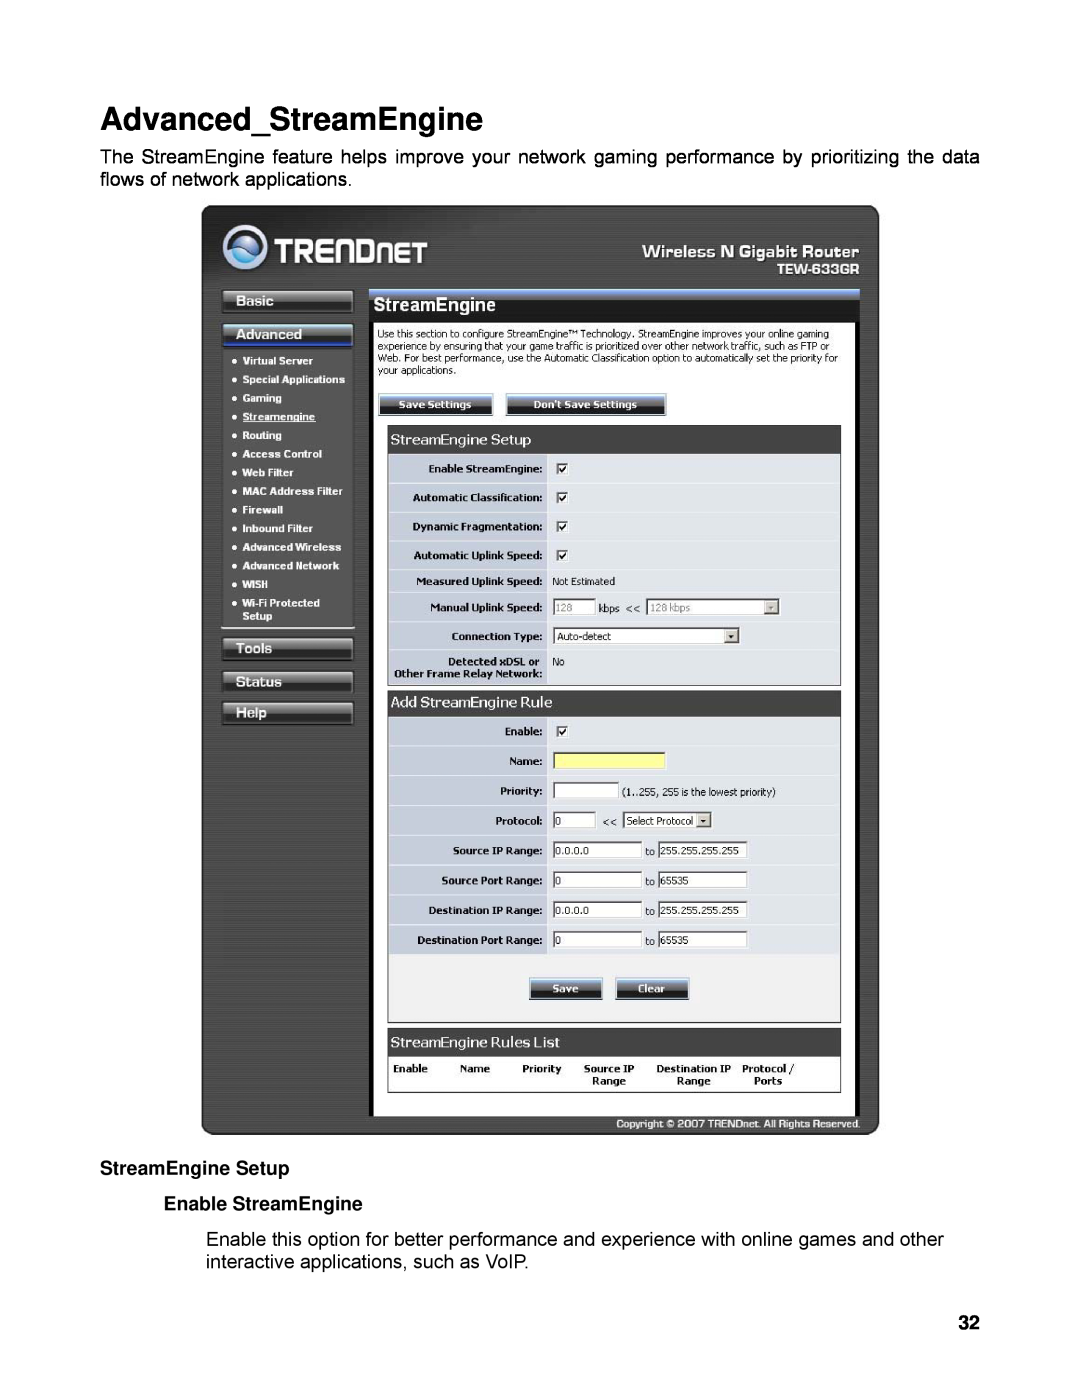 TRENDnet TEW-633GR manual AdvancedStreamEngine, StreamEngine Setup Enable StreamEngine 